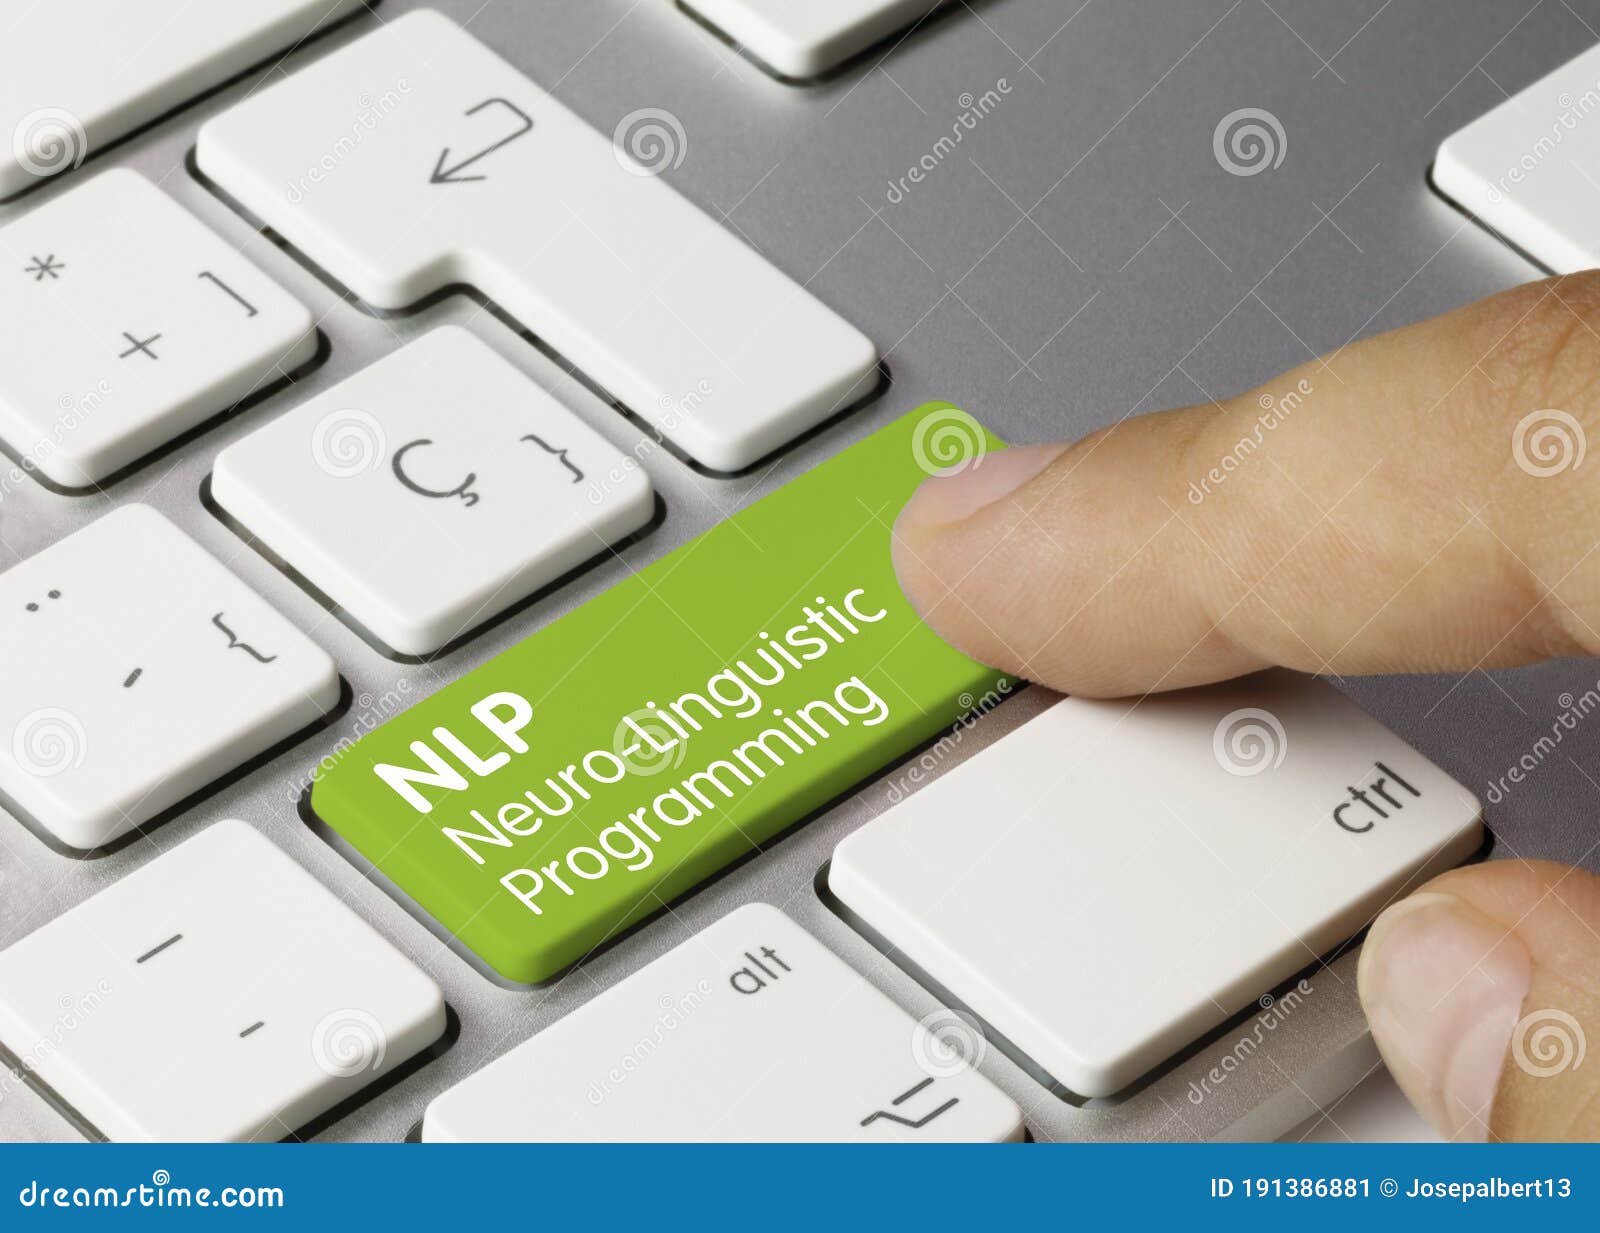 nlp neuro-linguistic programming - inscription on green keyboard key